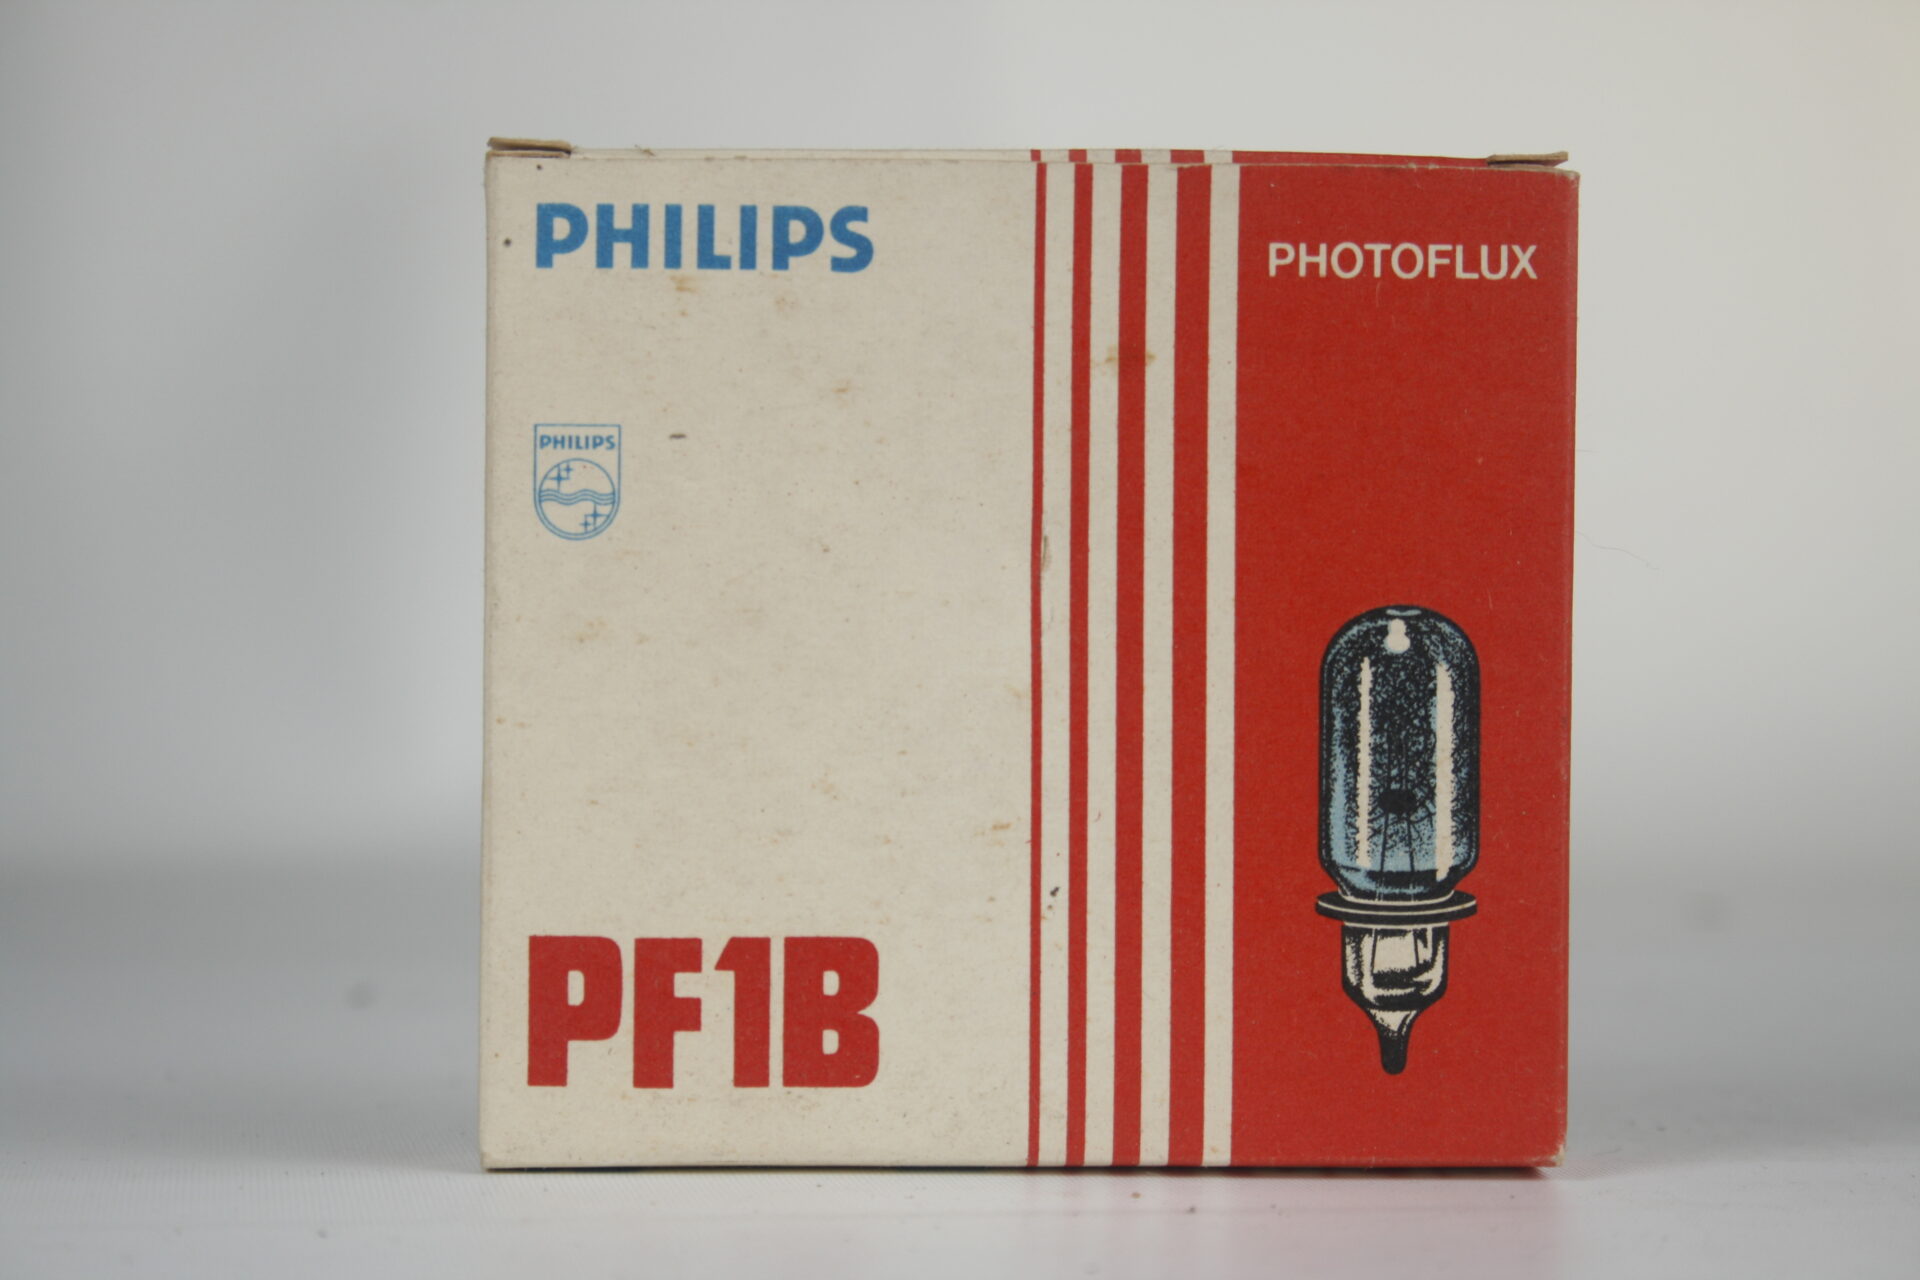 Philips Photoflux PF1B flitslampje